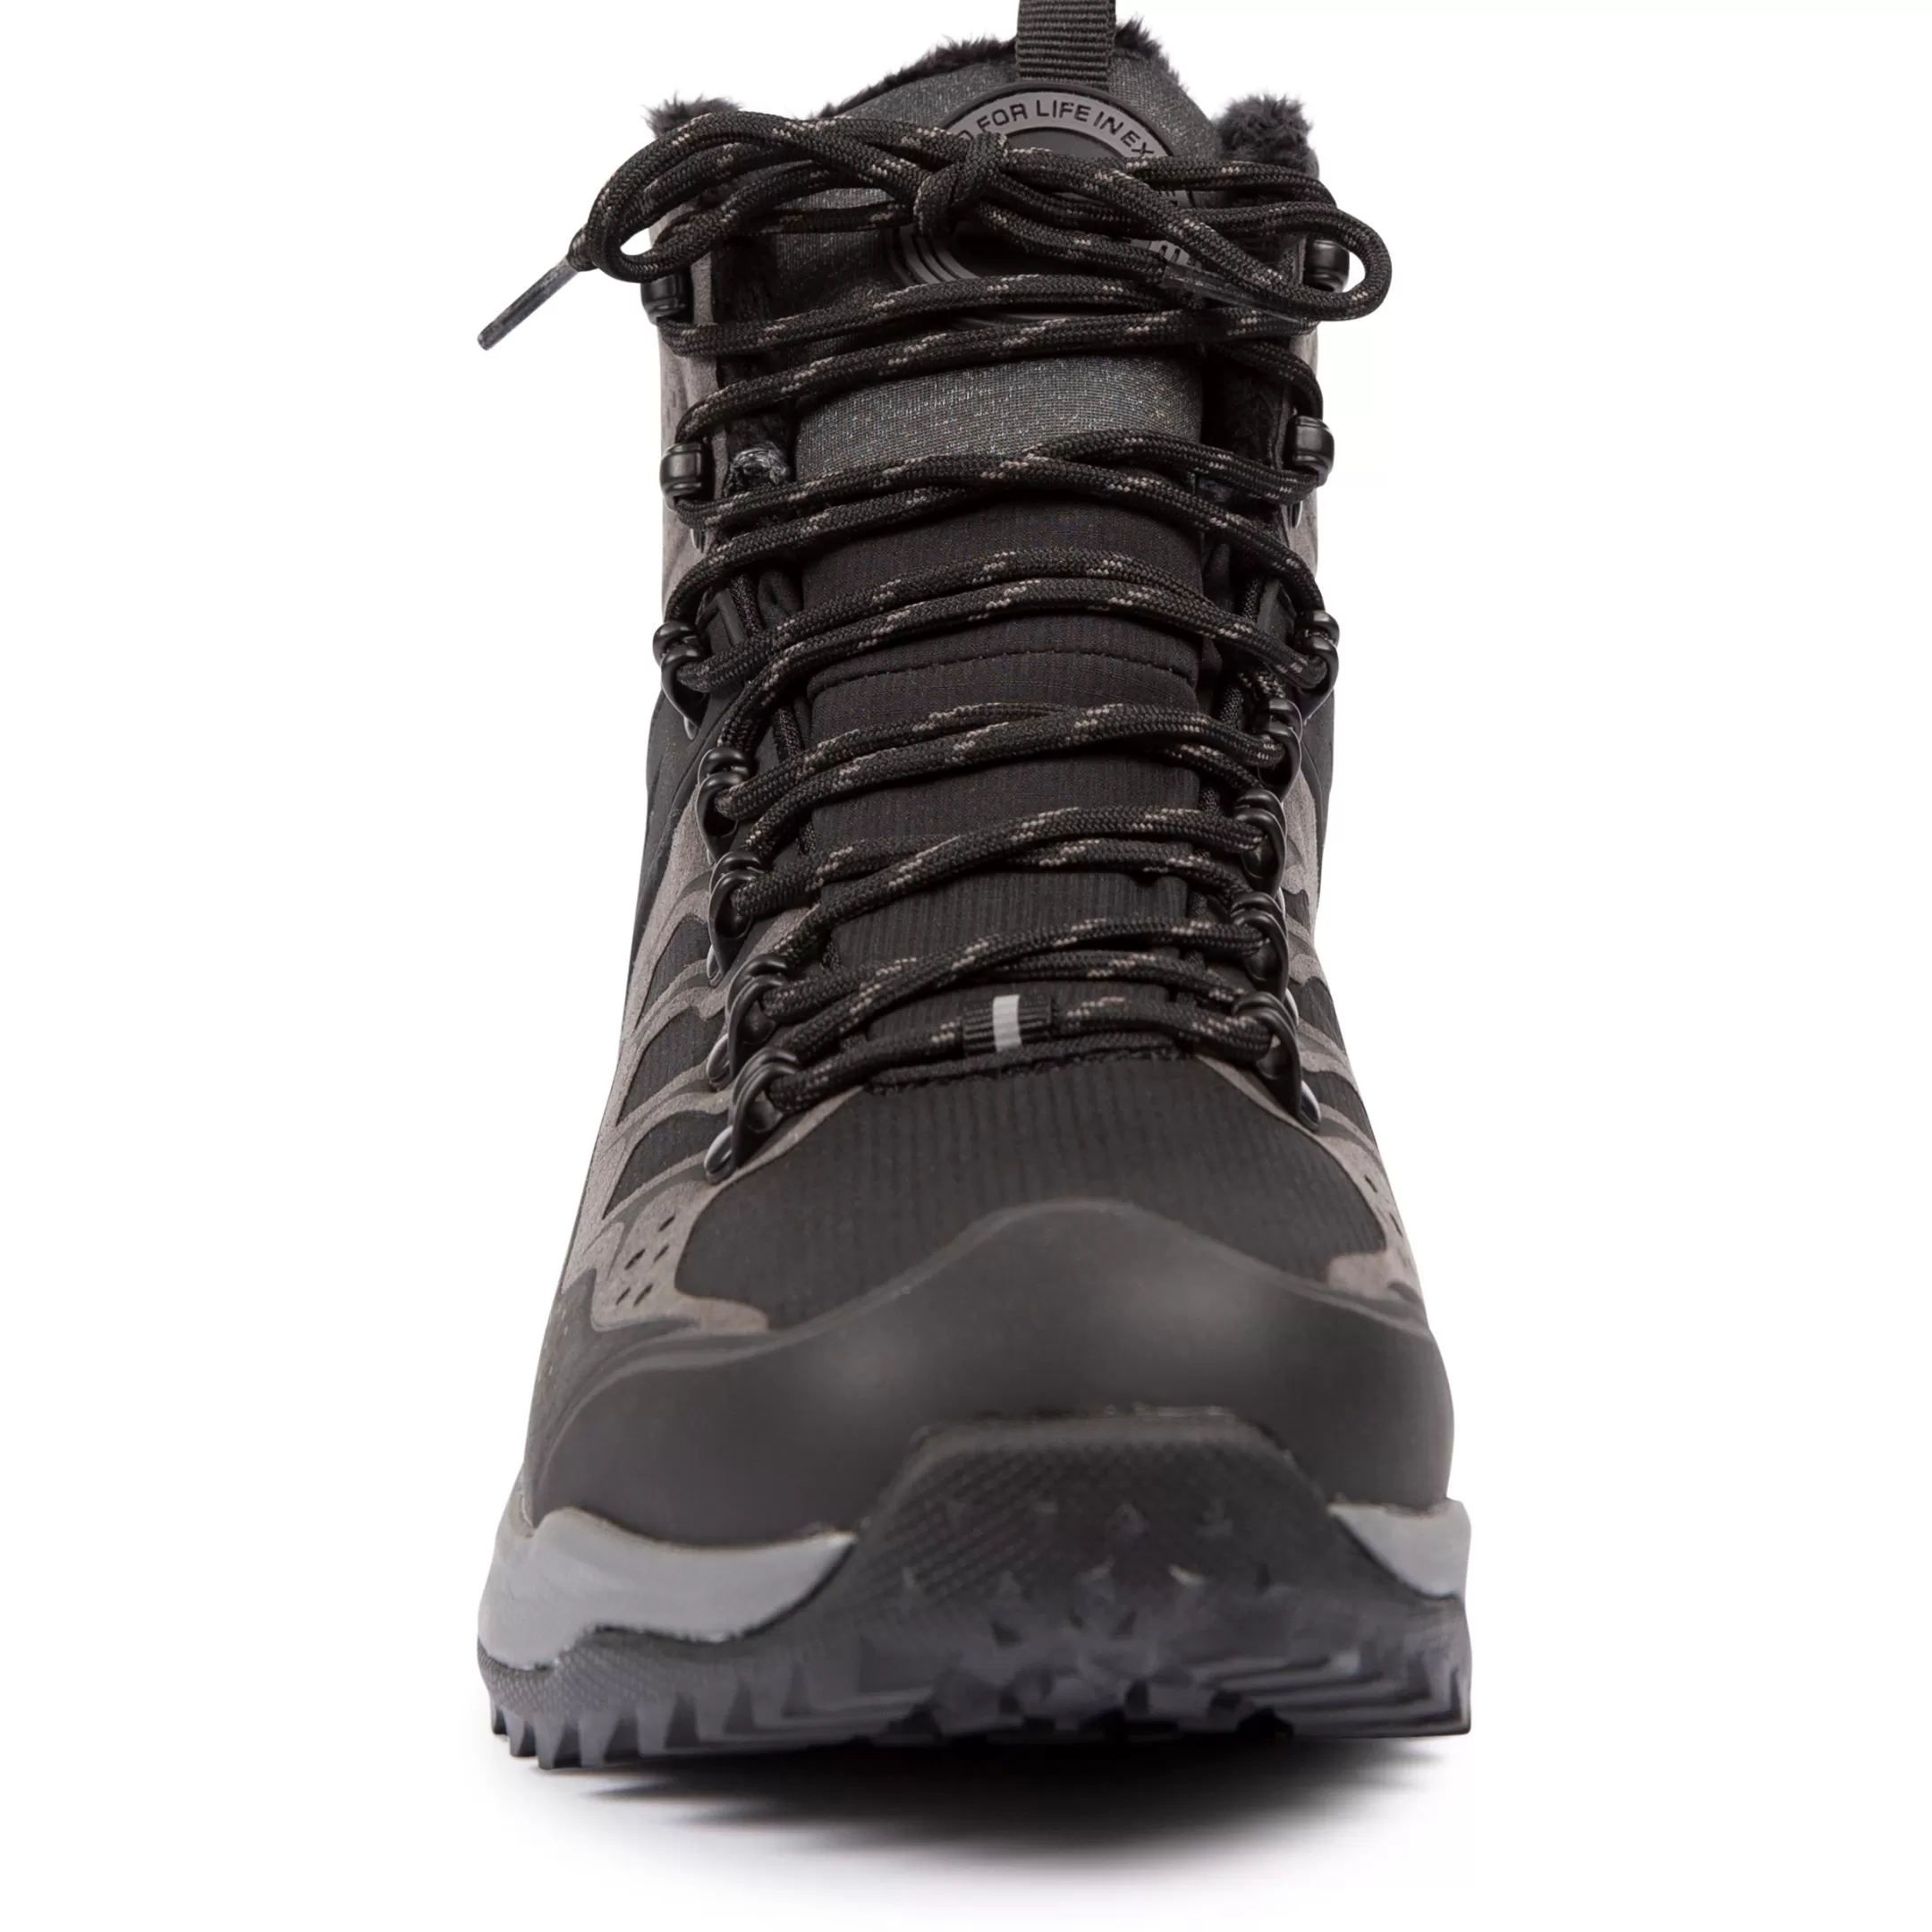 Men's DLX Walking Boots Knox | Trespass Cheap